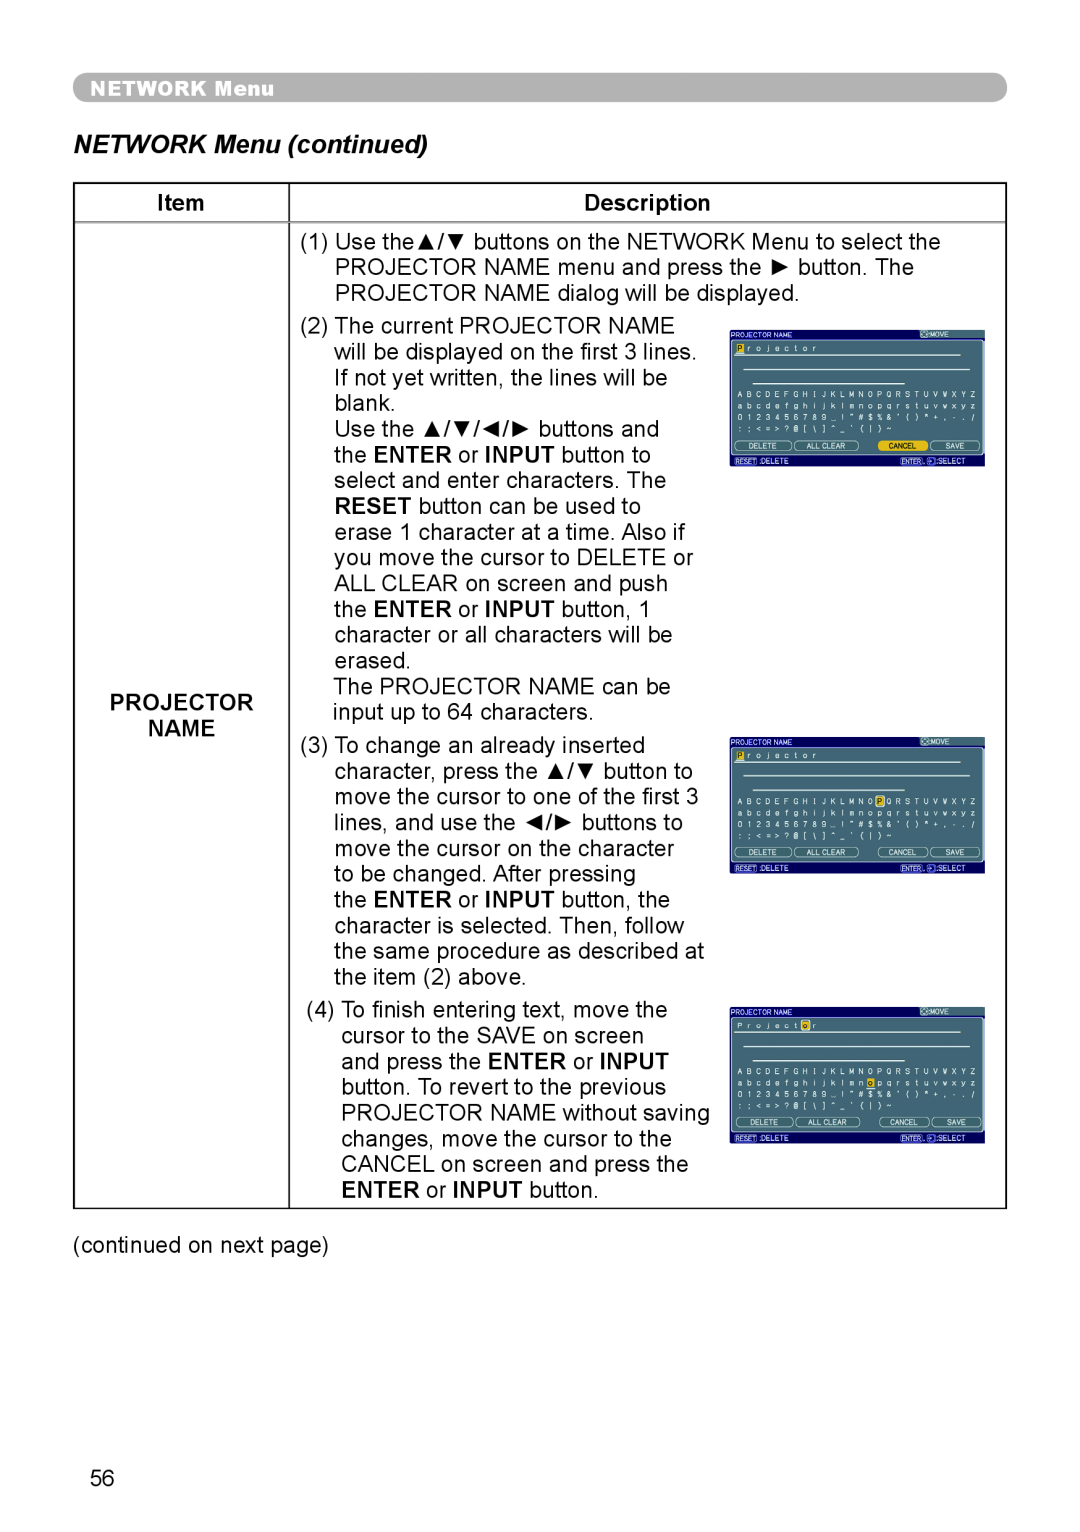 Hitachi CP-X206, CP-X306 user manual NETWORK Menu continued, Description, Projector, Name, ENTER or INPUT button 